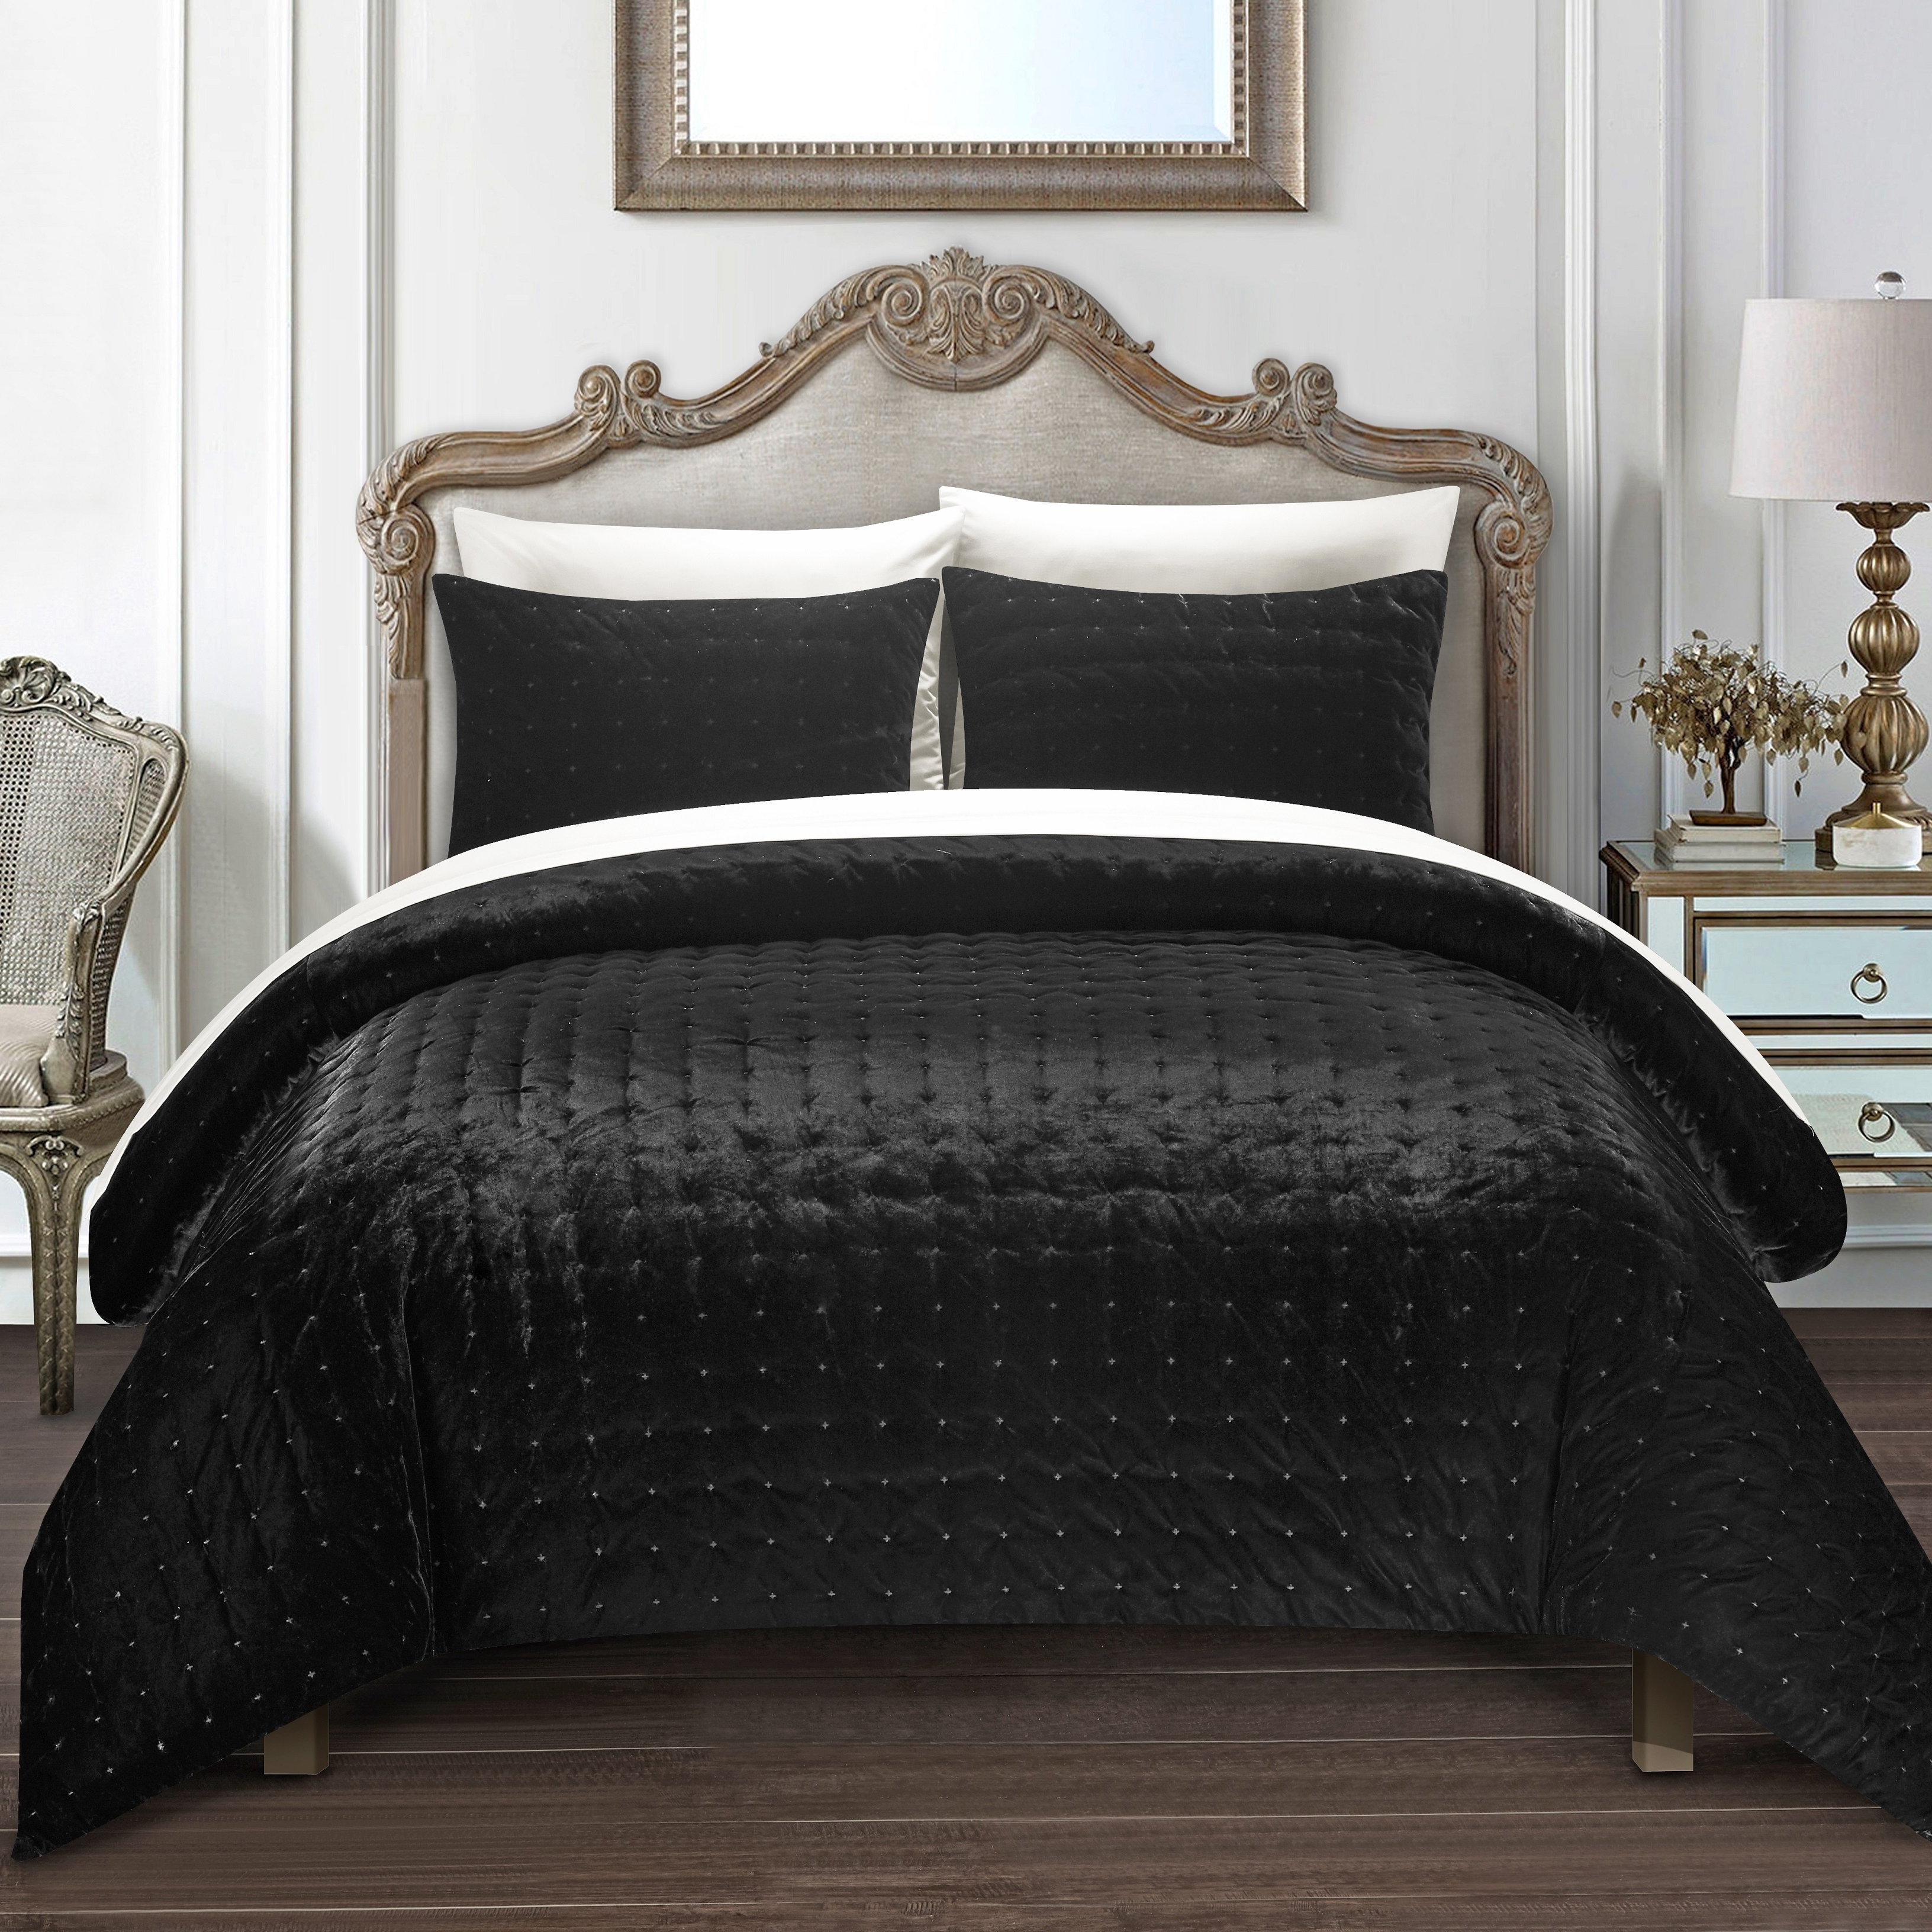 Chyna 3 Piece Comforter Set Luxurious Velvet Bedding - Black, King